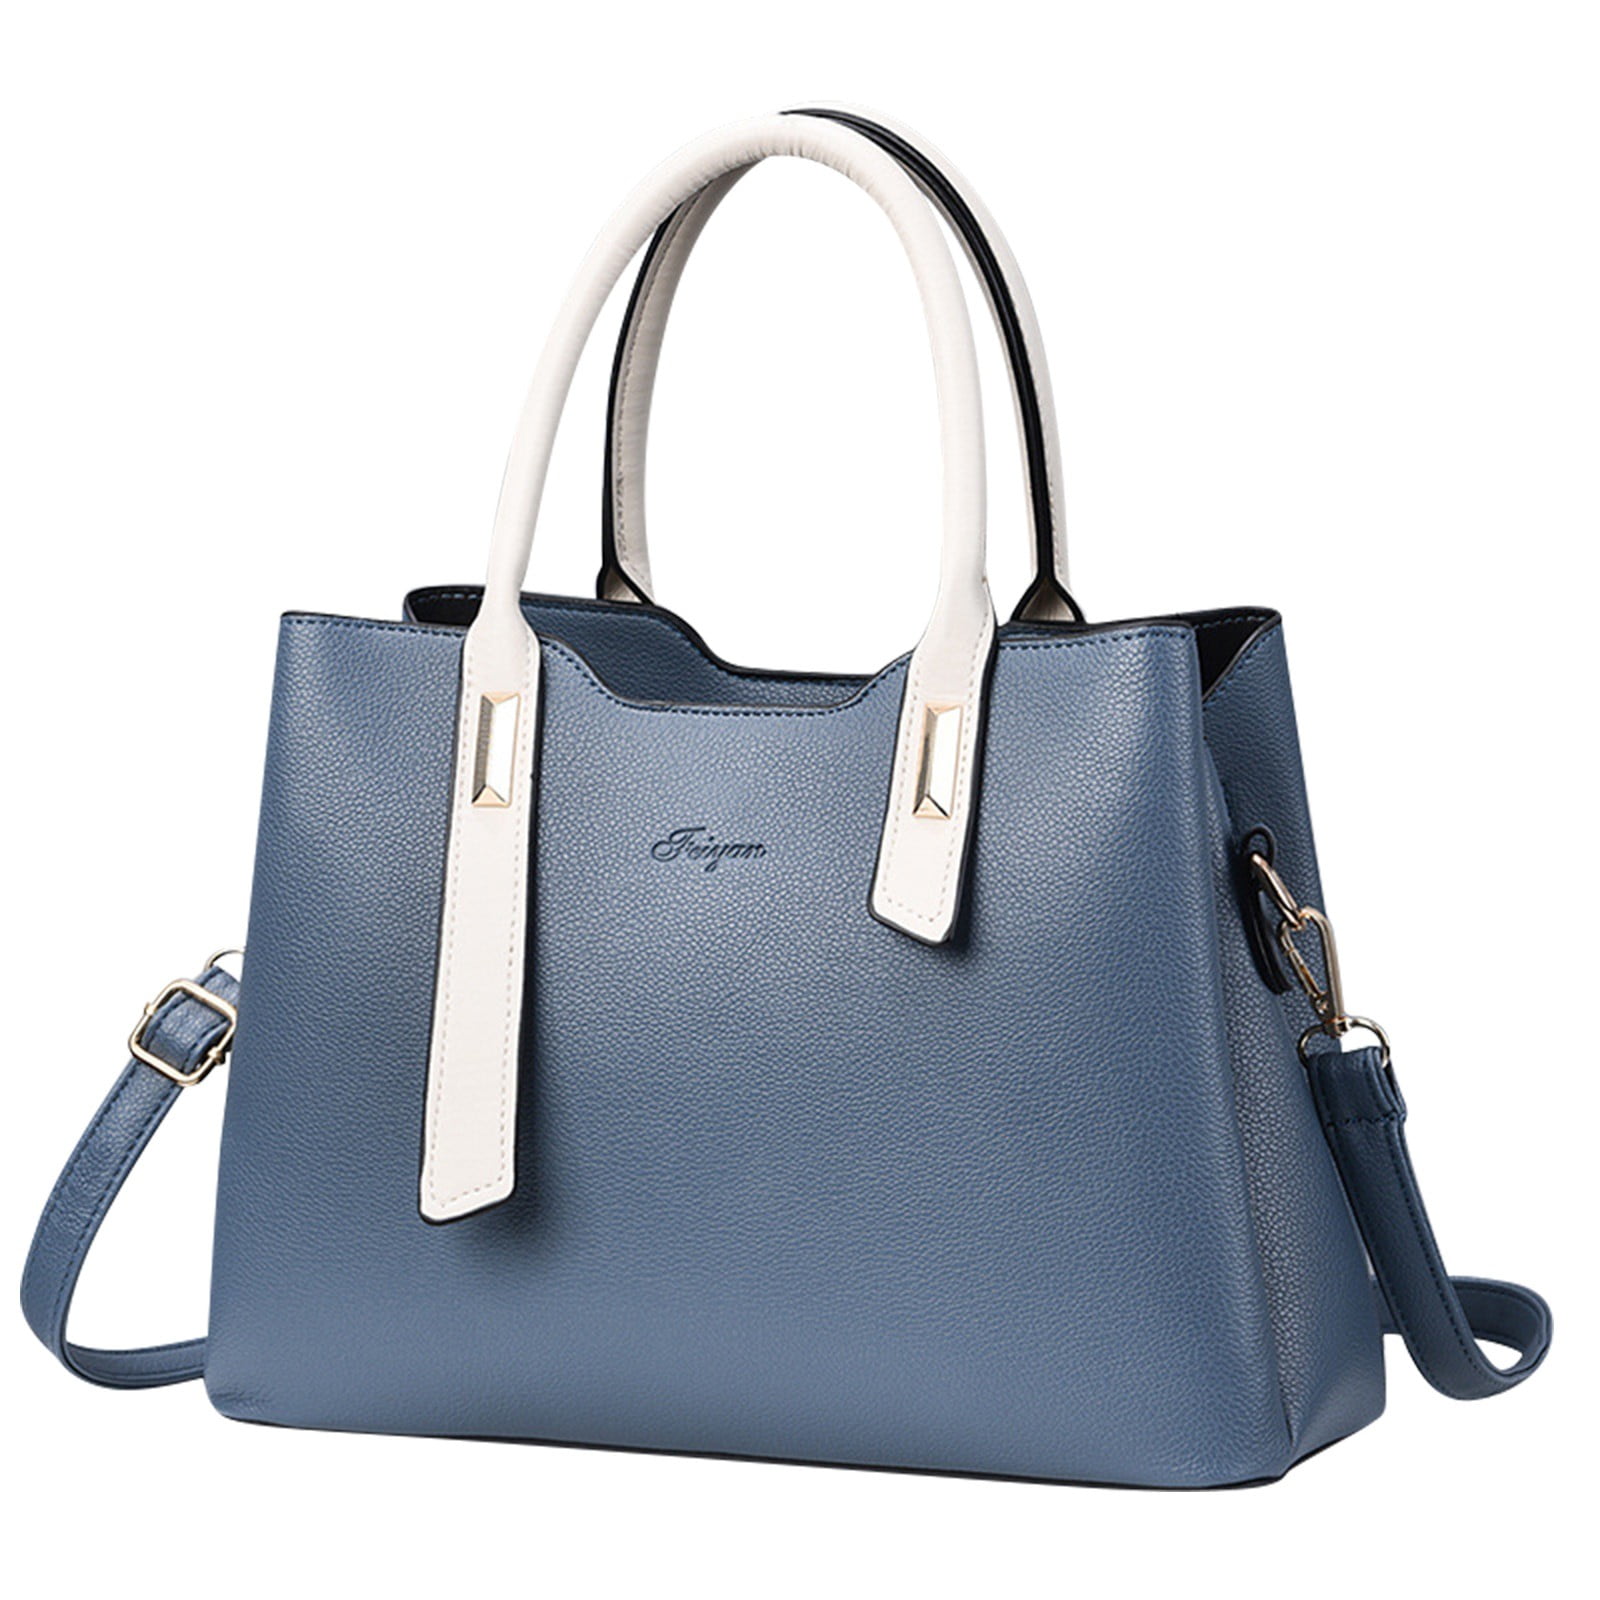 handbags for women hand bags women style,ladies purse,ladies bag,purse for  women hand bag